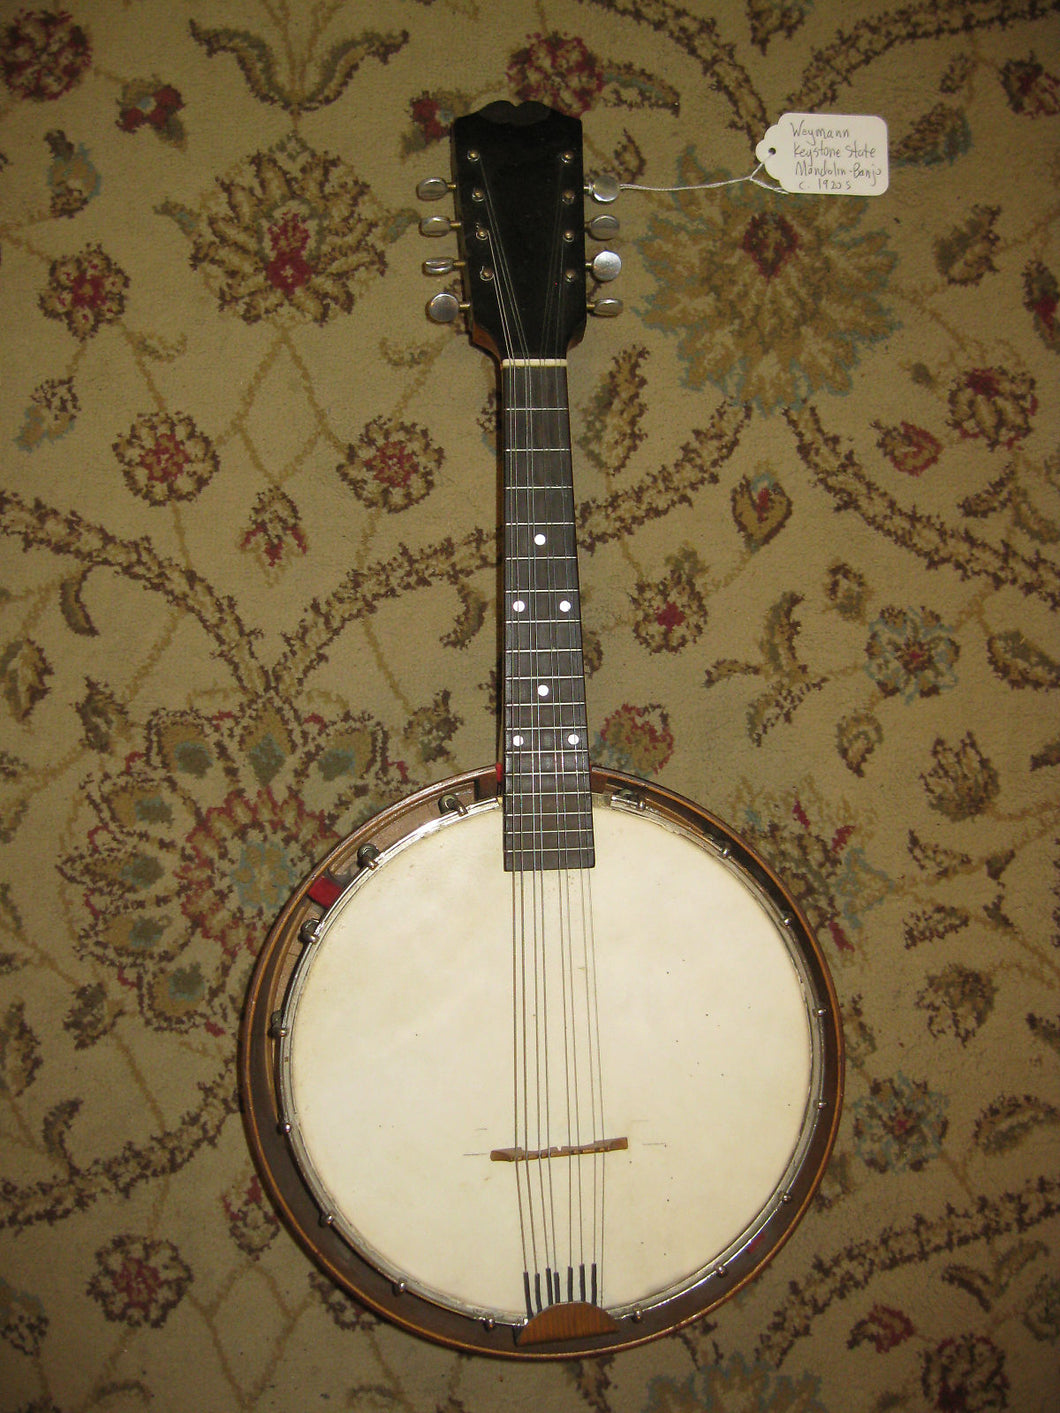 Weymann Keystone State Mandolin-Banjo c.1920s - Jakes Main Street Music